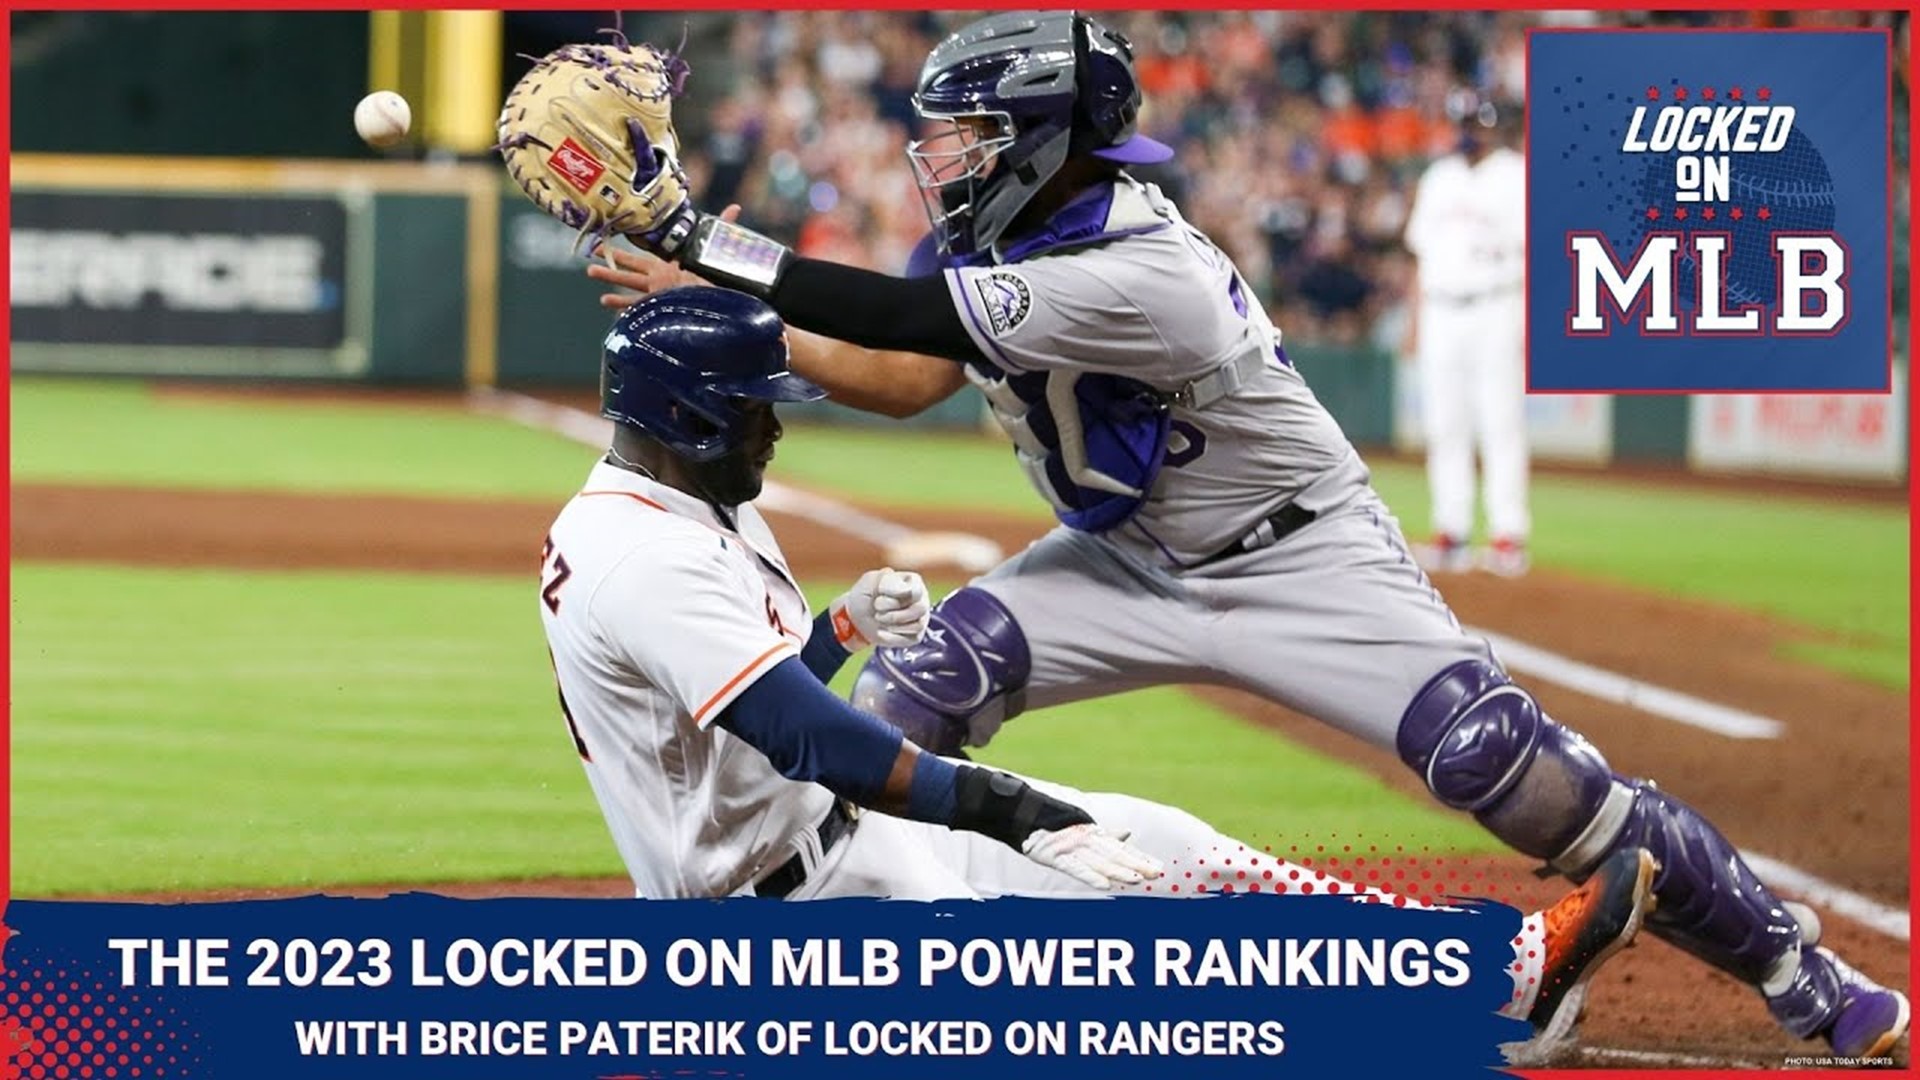 Locked on MLB - The 2023 Locked on MLB Power Rankings with Brice Paterik